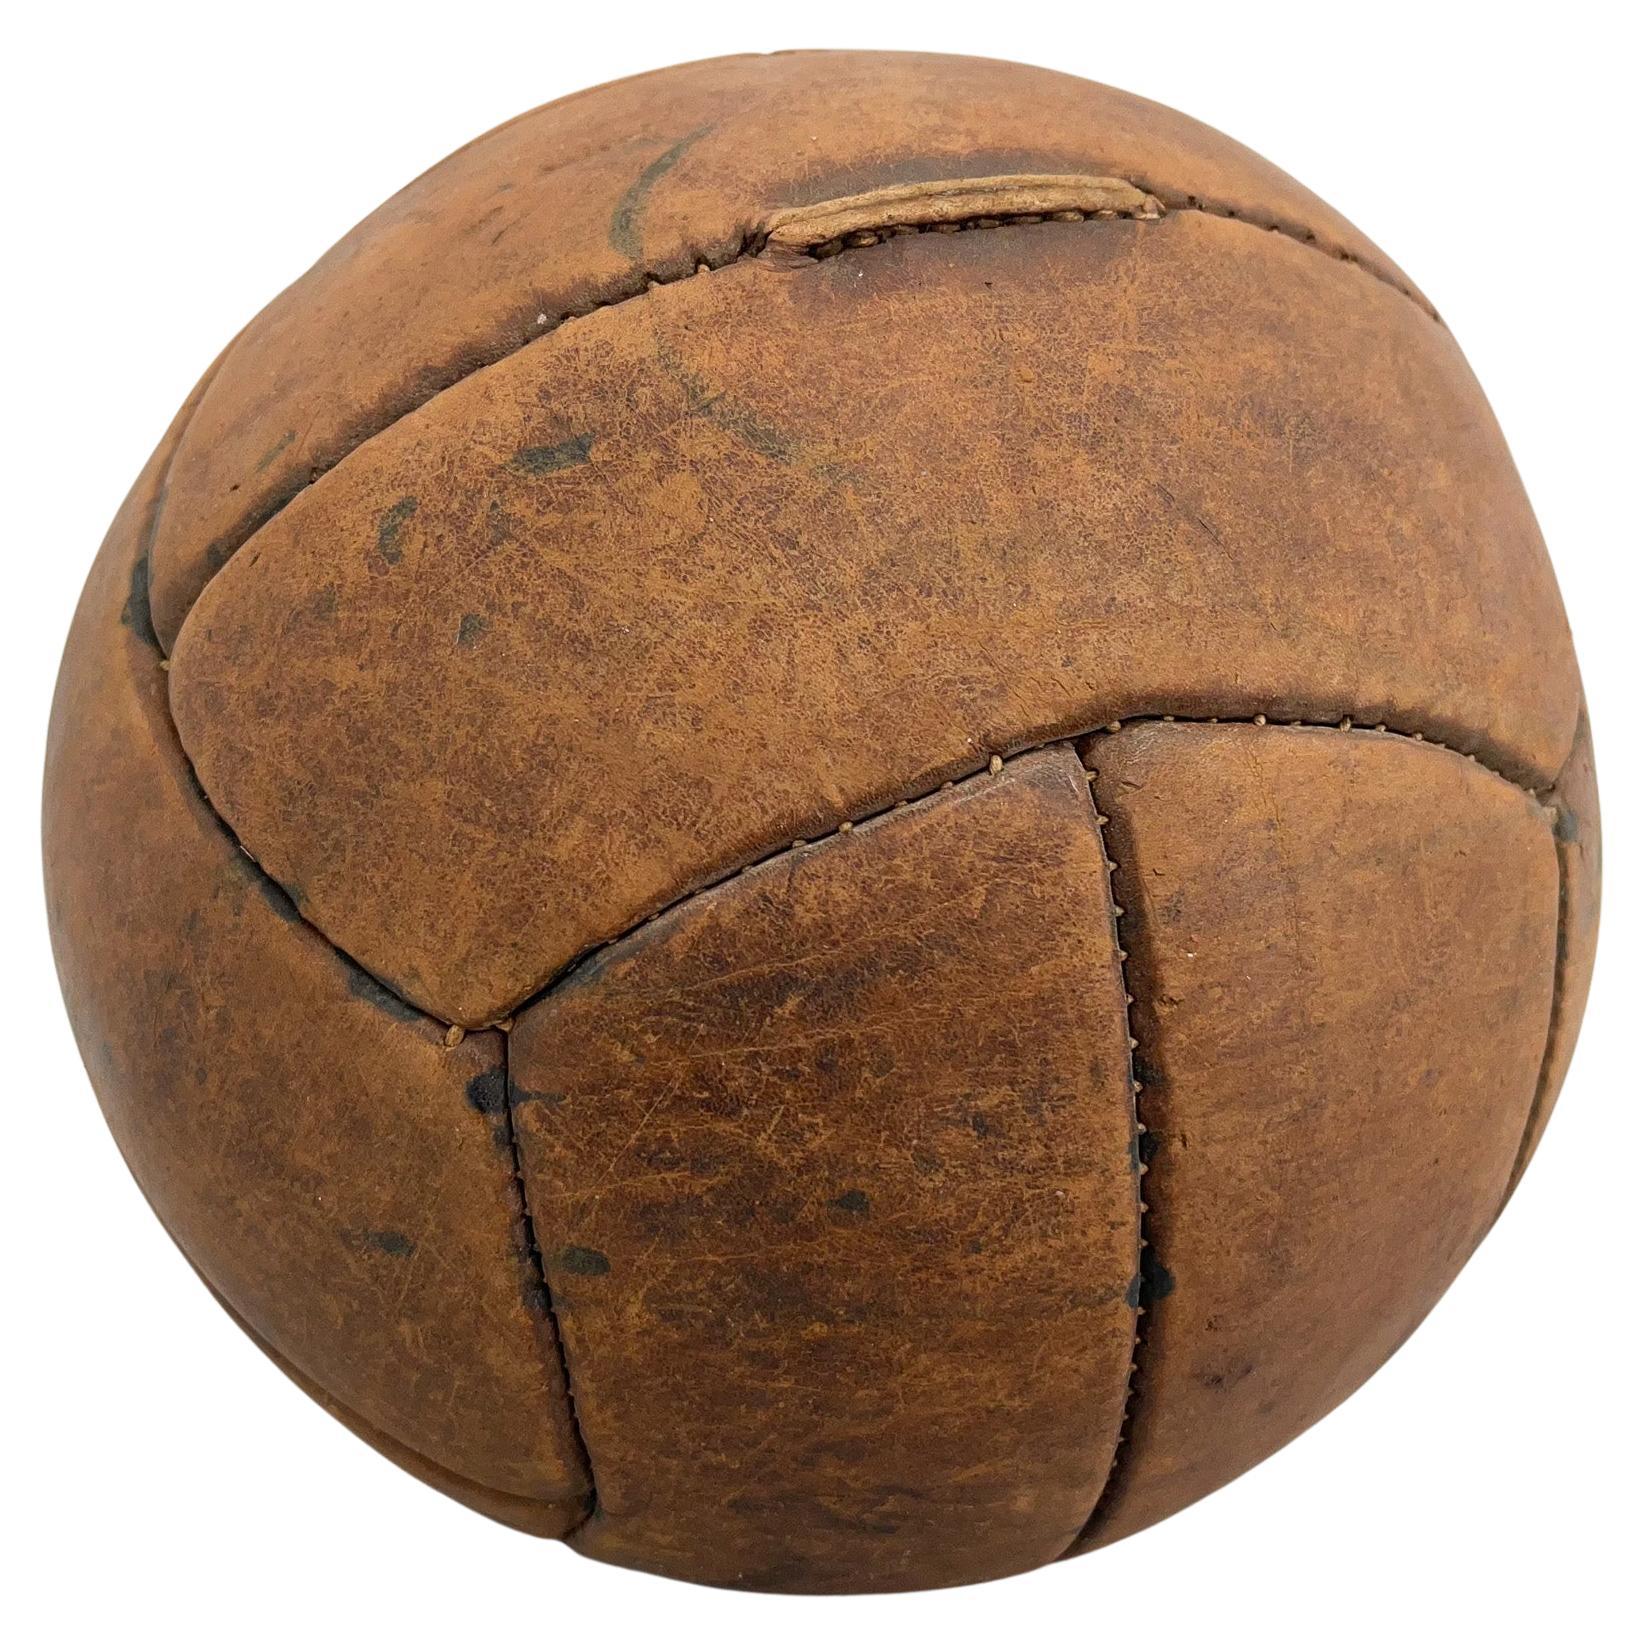 Vintage Brown Leather Medicine Ball, 1930s